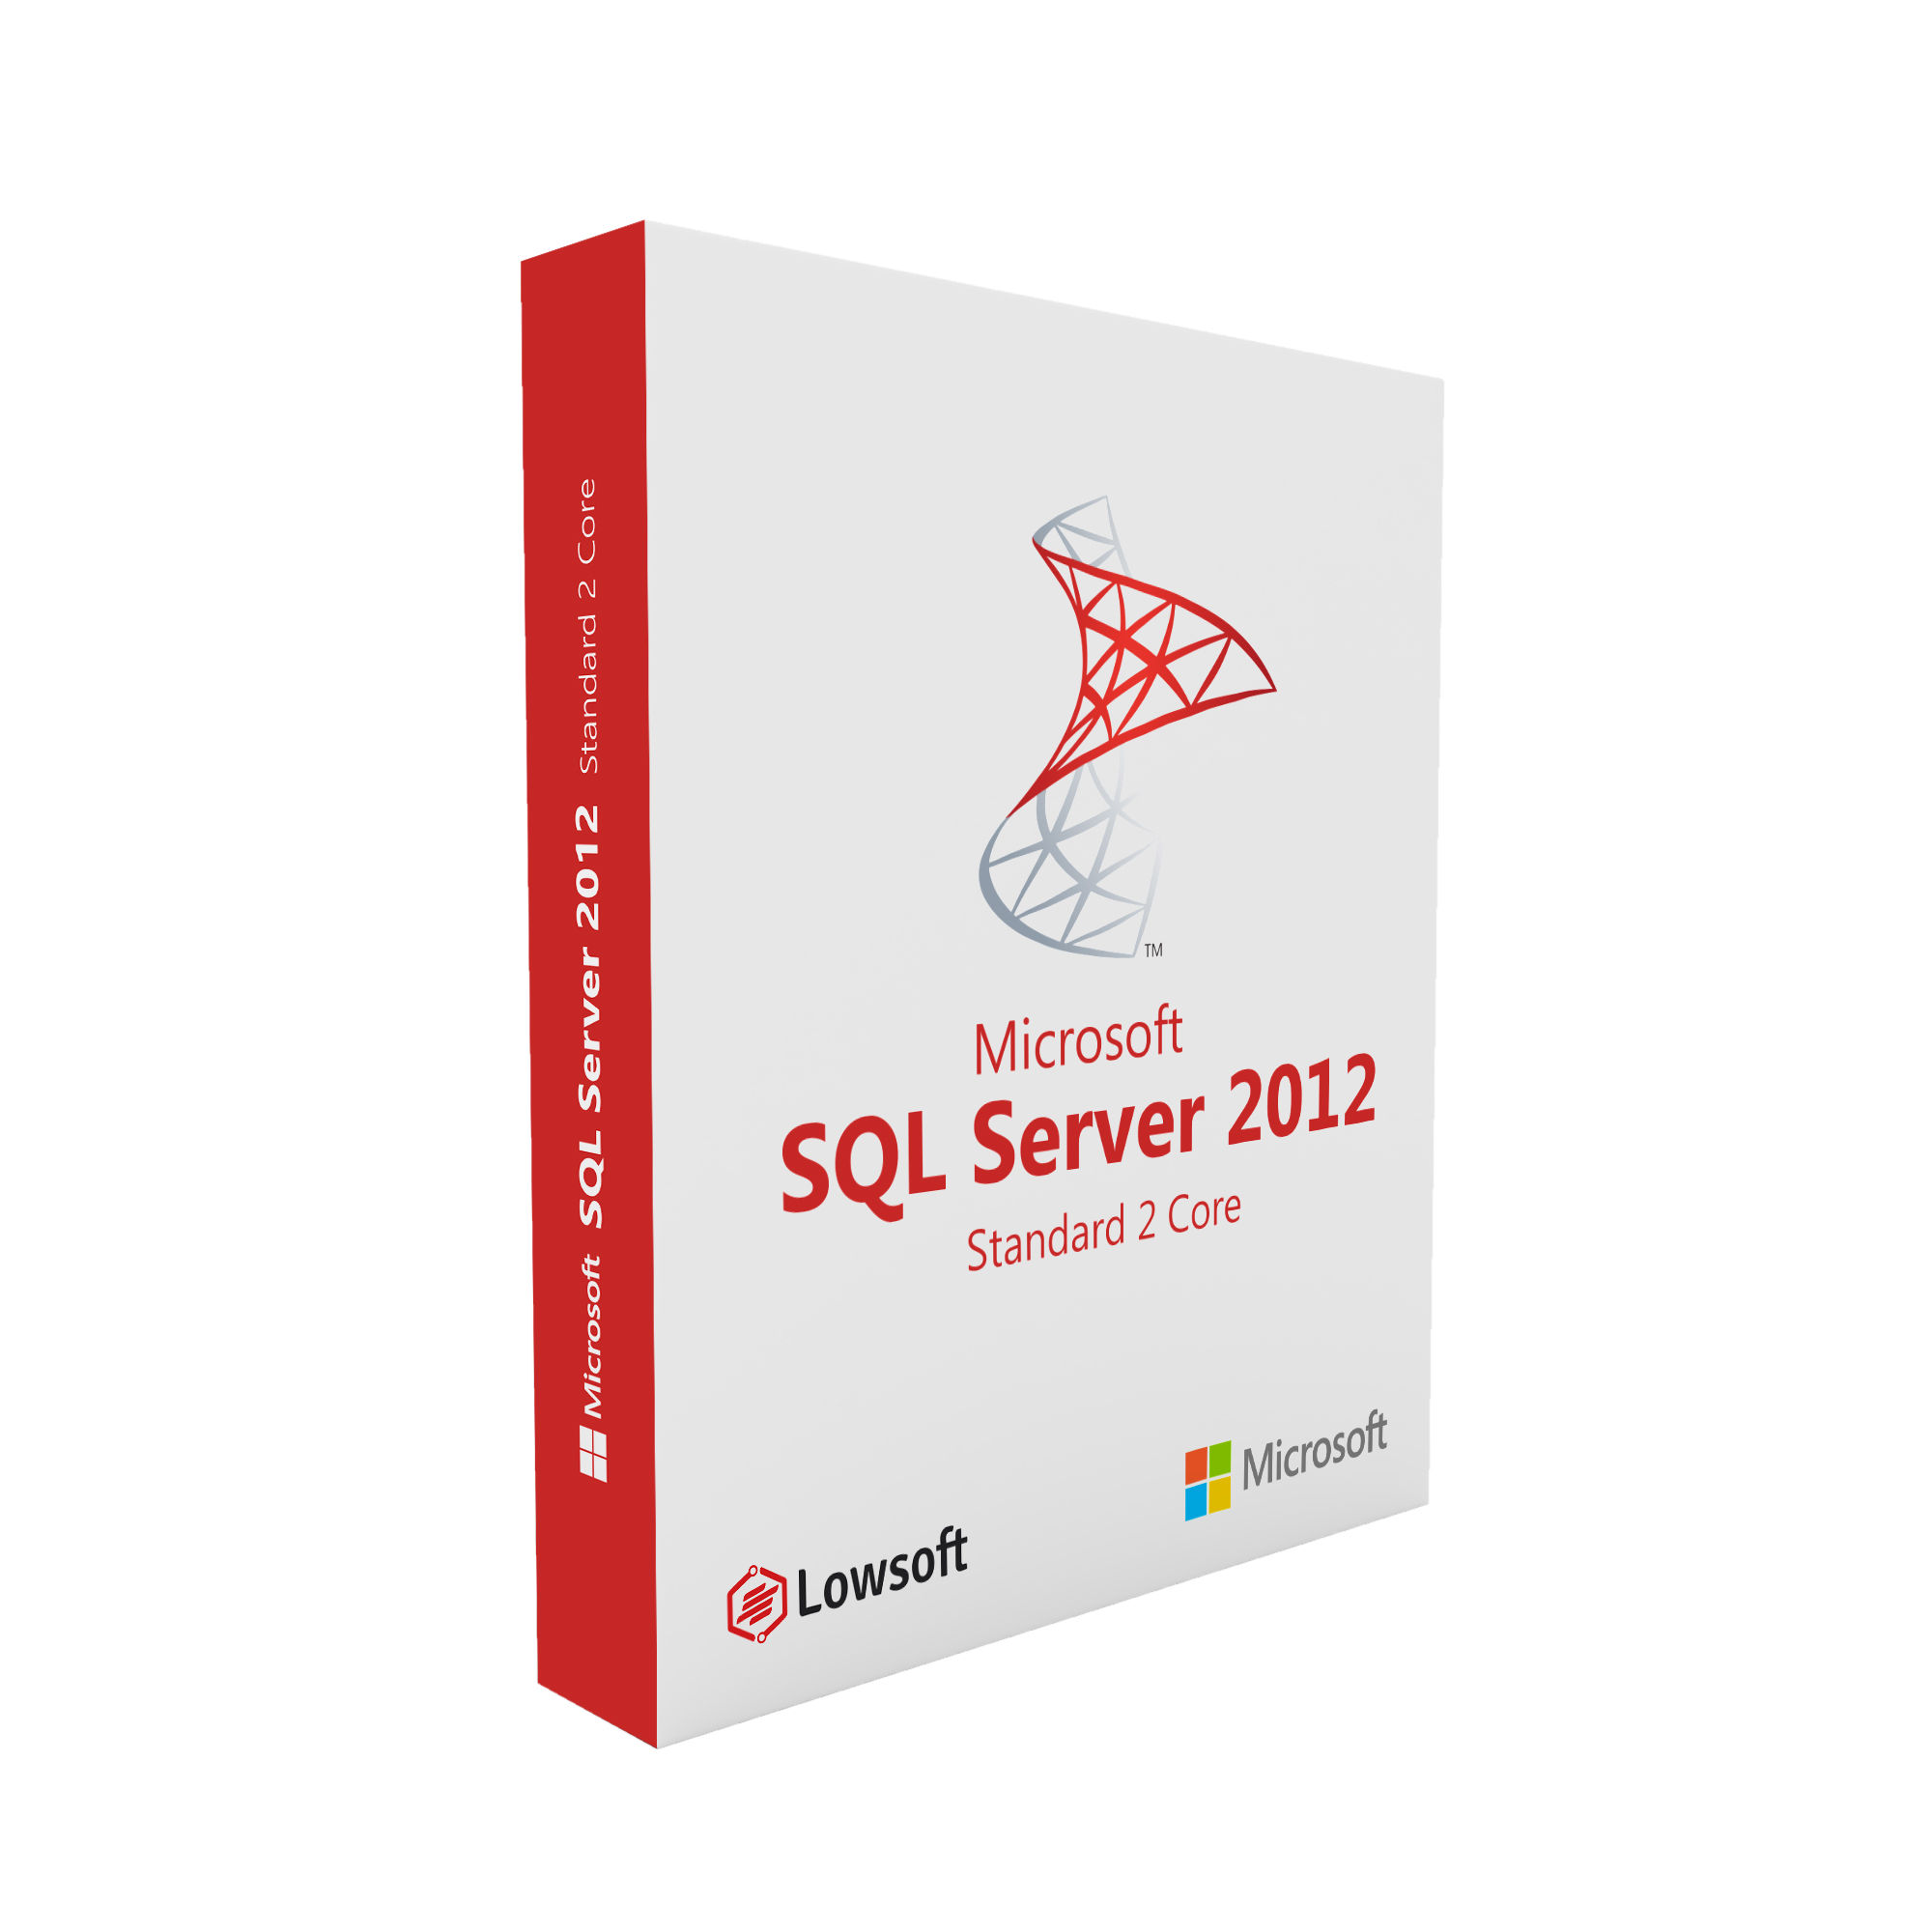 SQL Server 2012 Standard (2 Core)